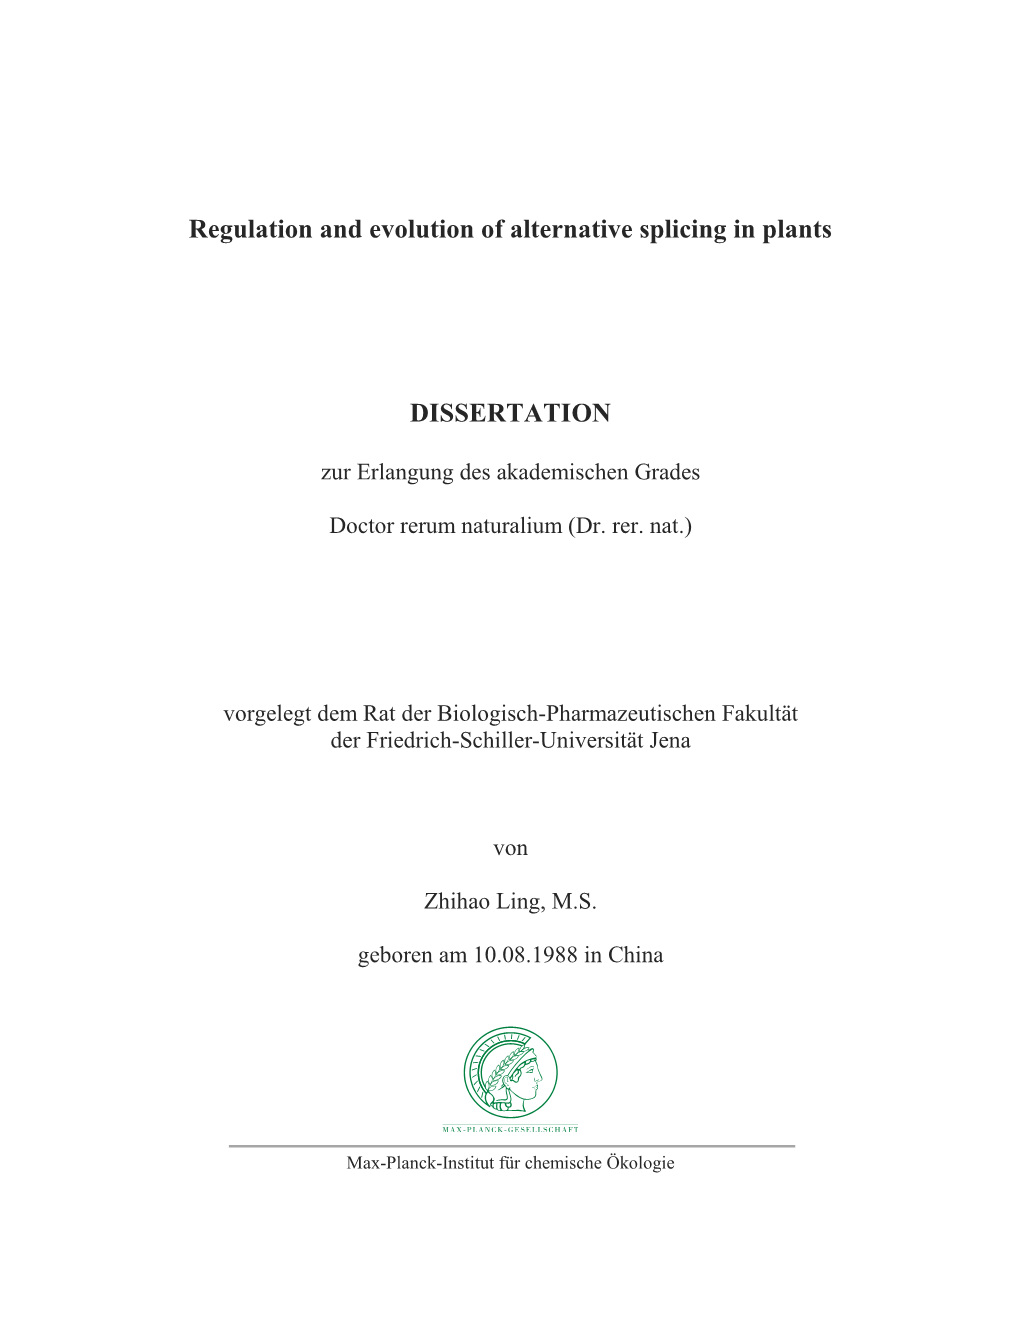 Regulation and Evolution of Alternative Splicing in Plants